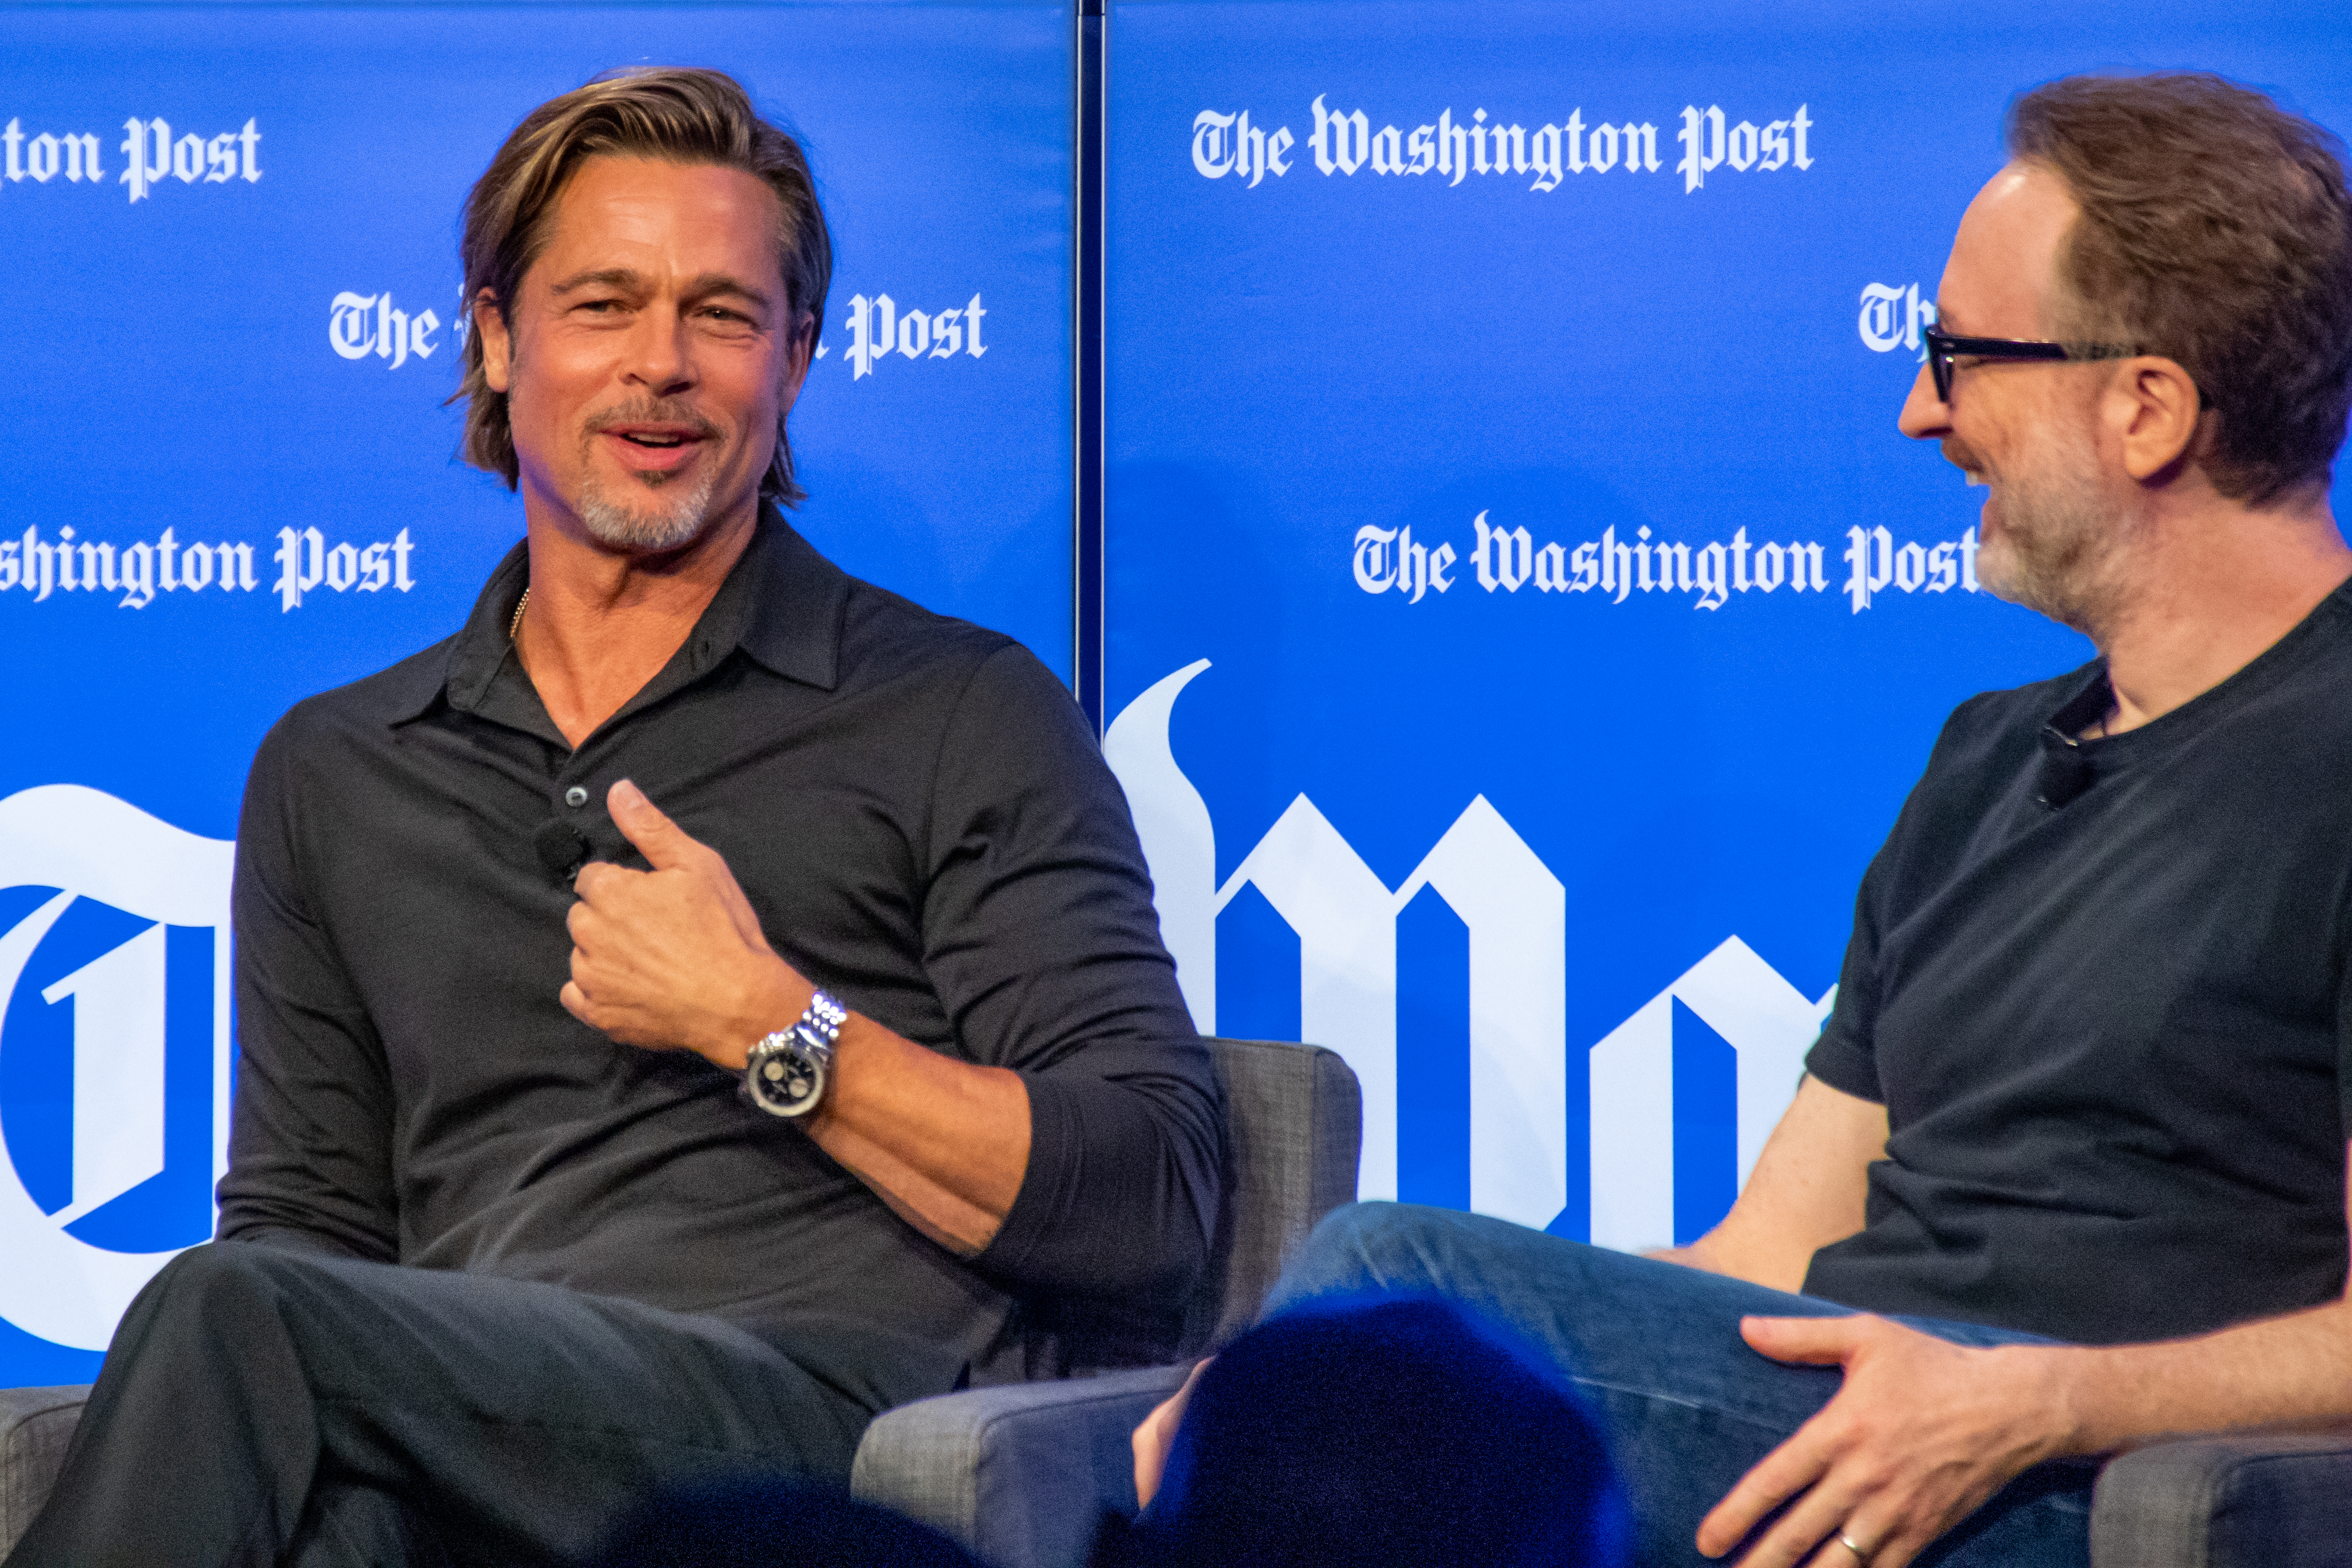 SENATUS - Brad Pitt reprises his role as brand ambassador for